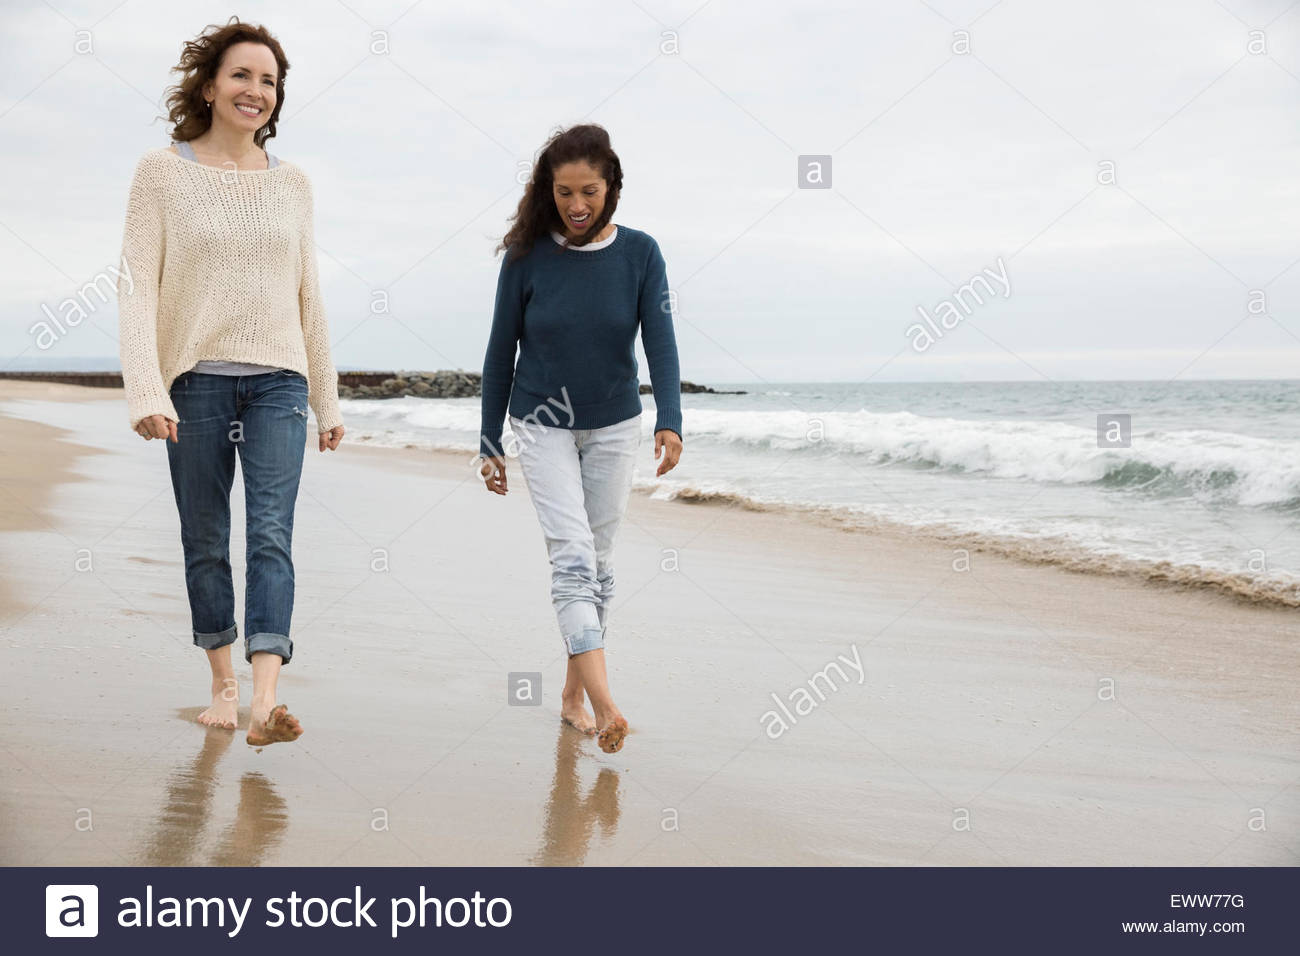 Women walking on beach Banque D'Images